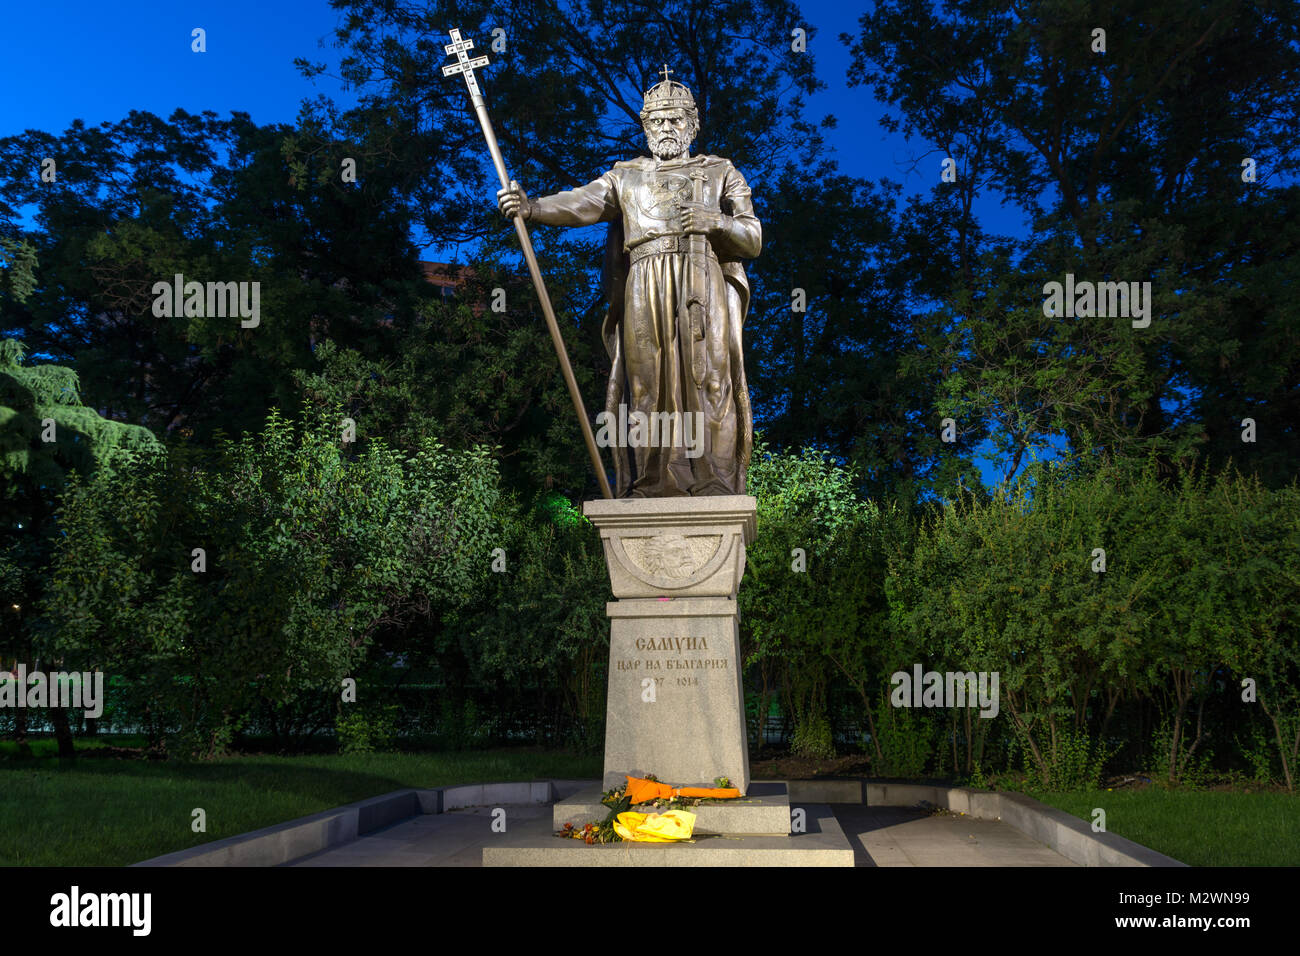 Notte foto di monumento del bulgaro Tsar Samuel, Sofia, Bulgaria Foto Stock